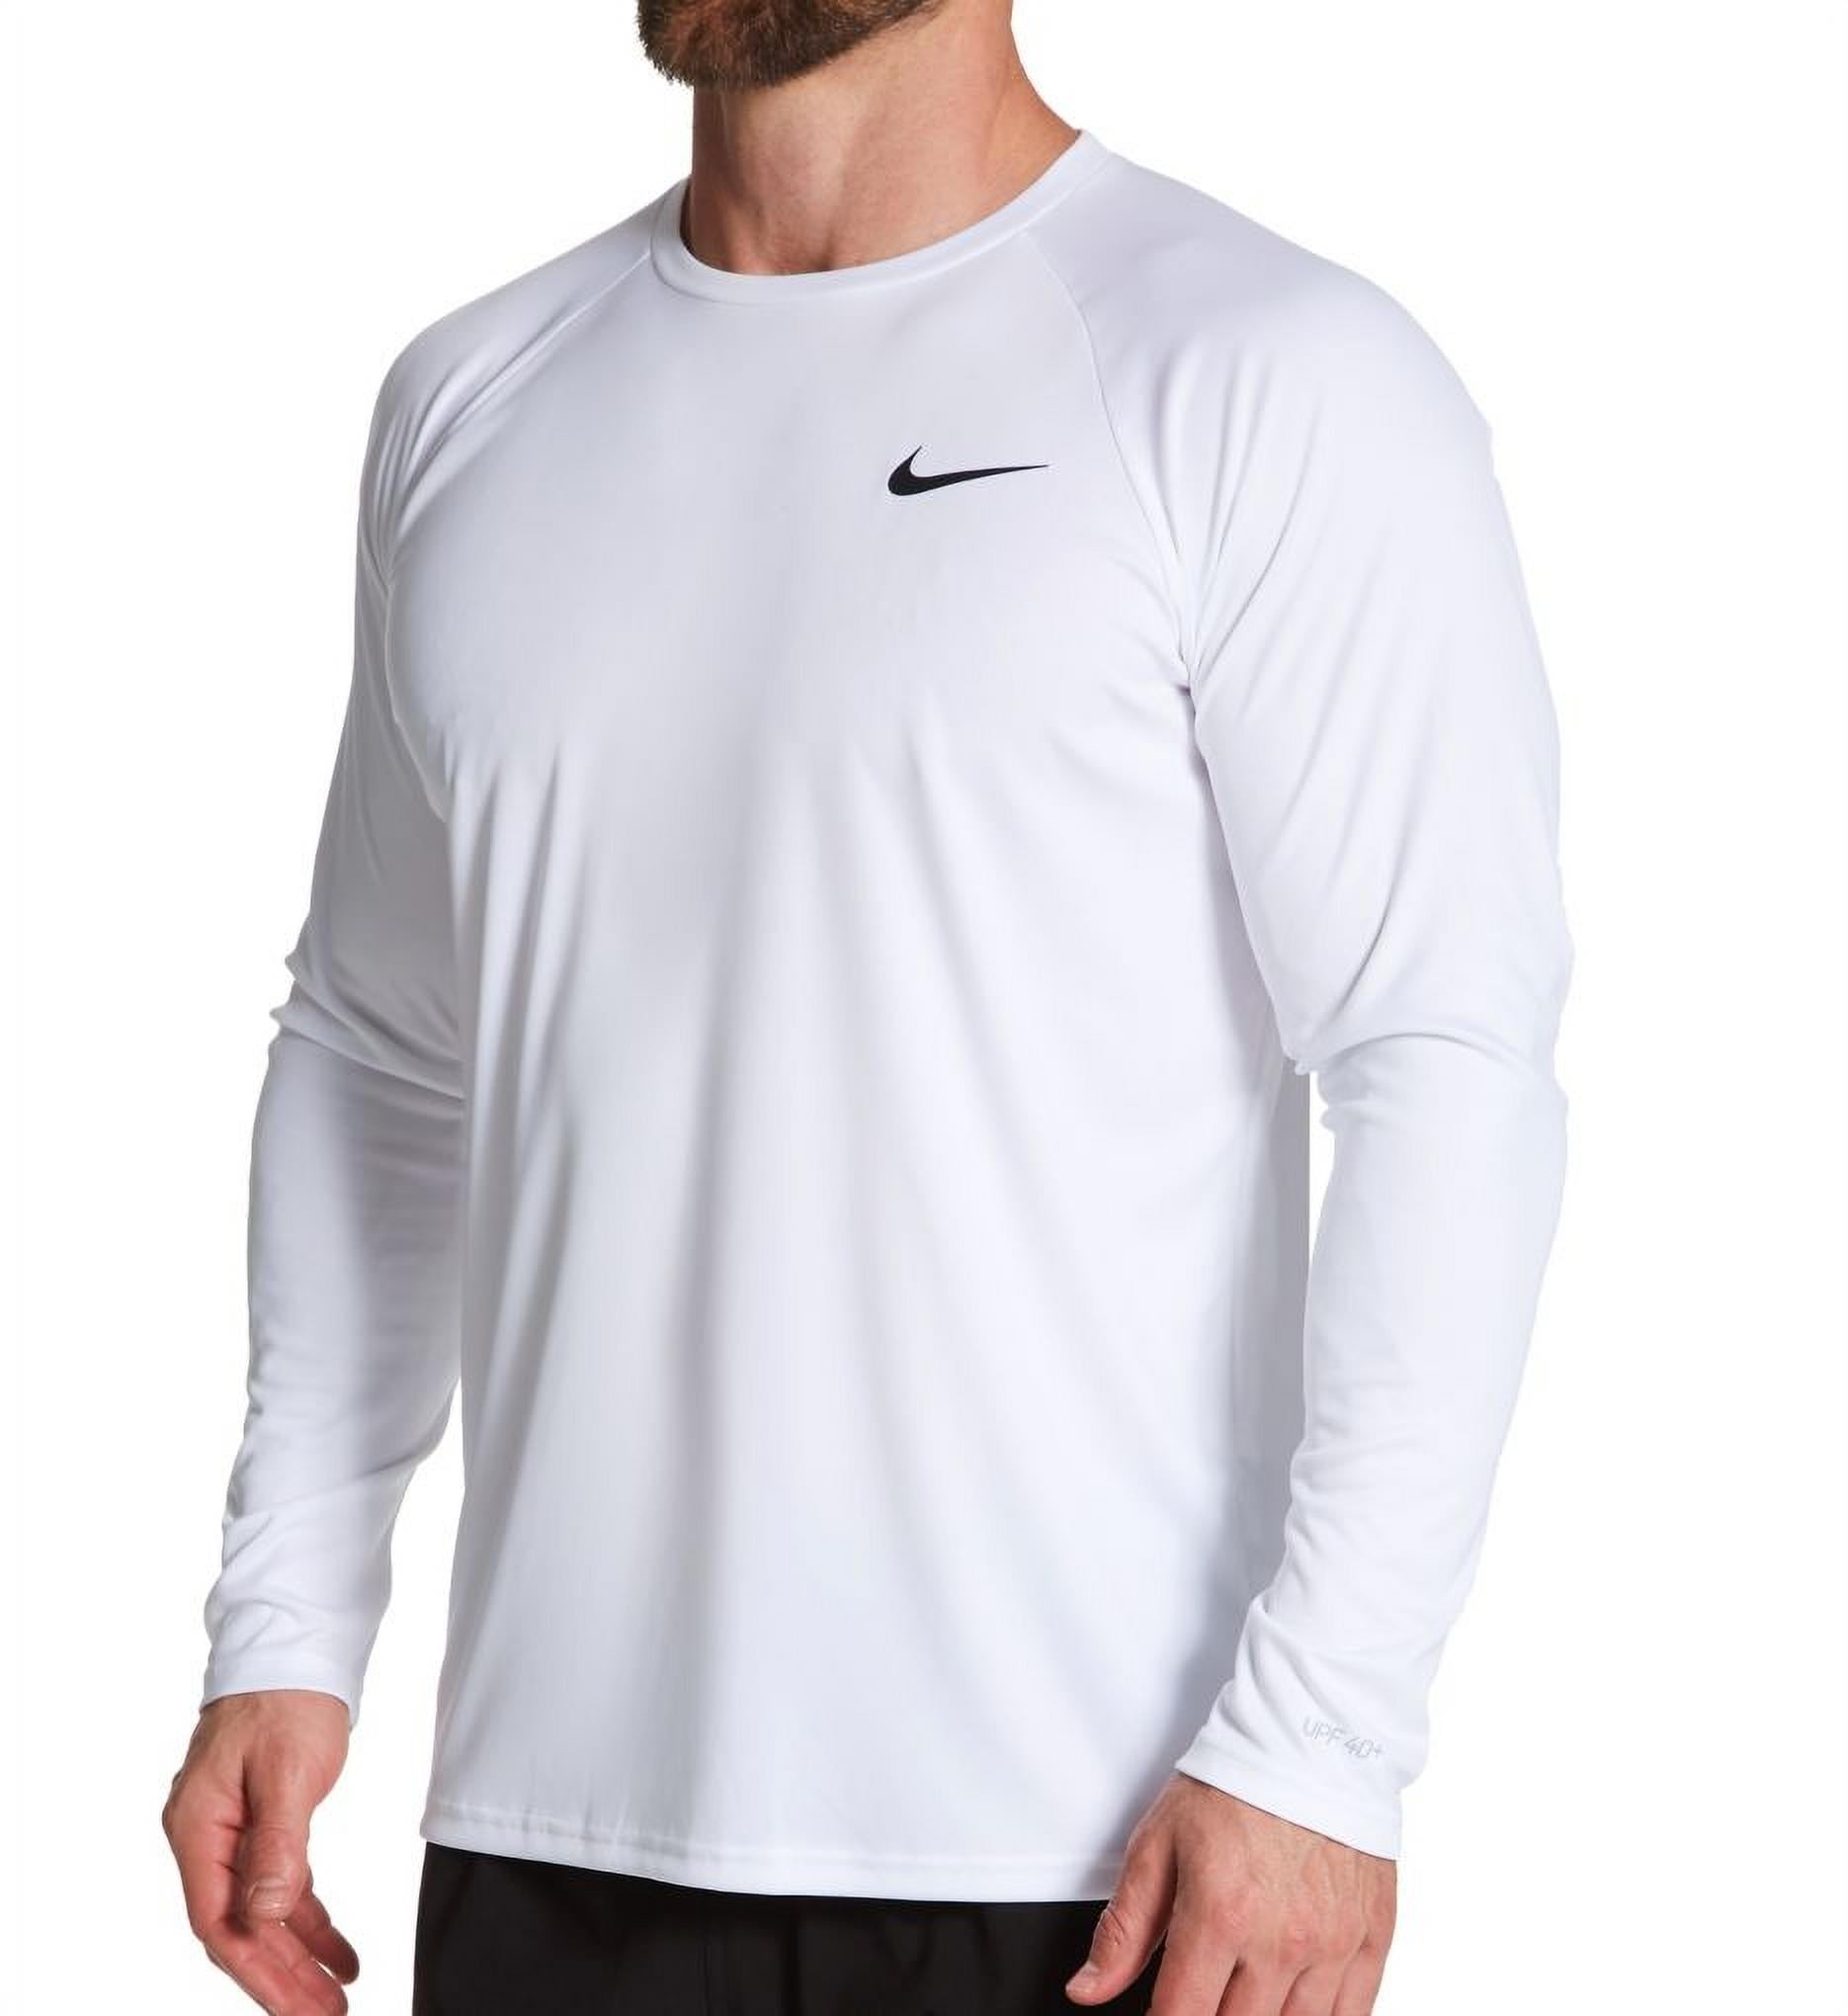 Nike ESSA587 Dri-Fit Long Sleeve Rashguard (White L) - Walmart.com